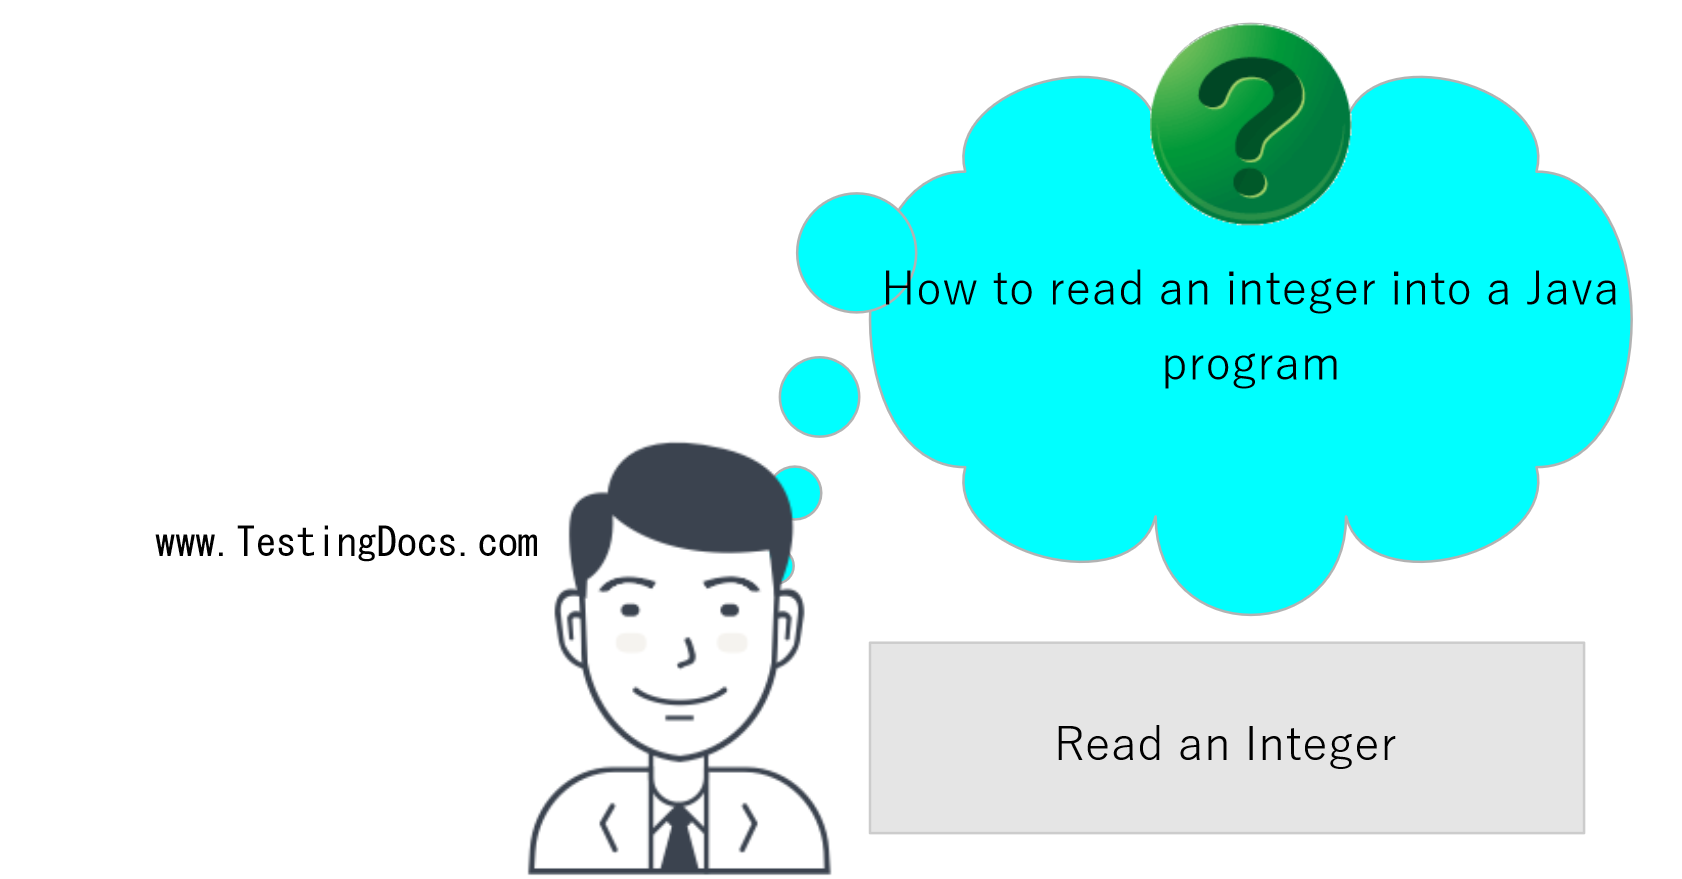 Java program to read an integer